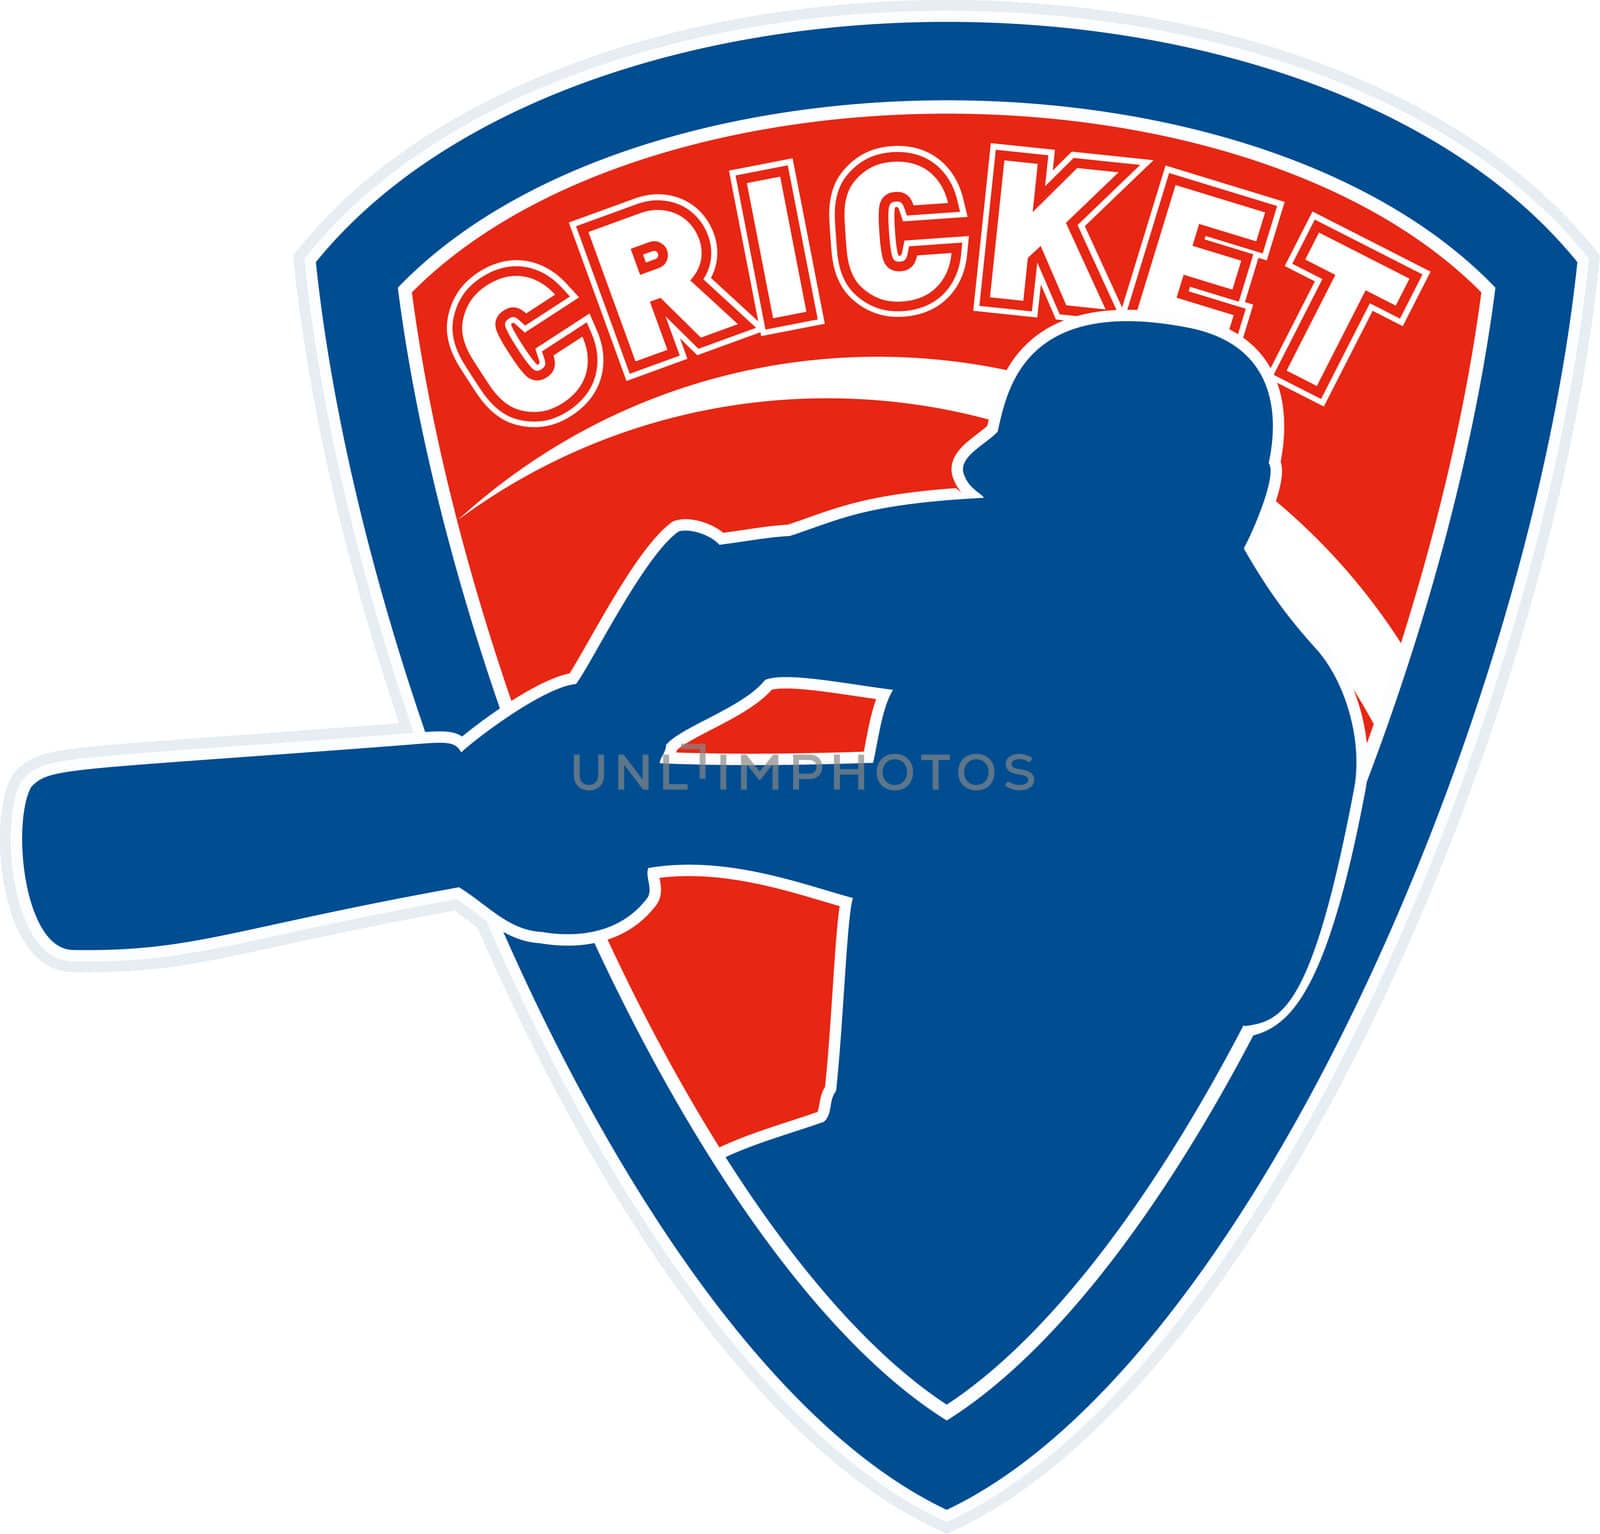 illustration of a cricket sports player batsman silhouette batting set inside shield